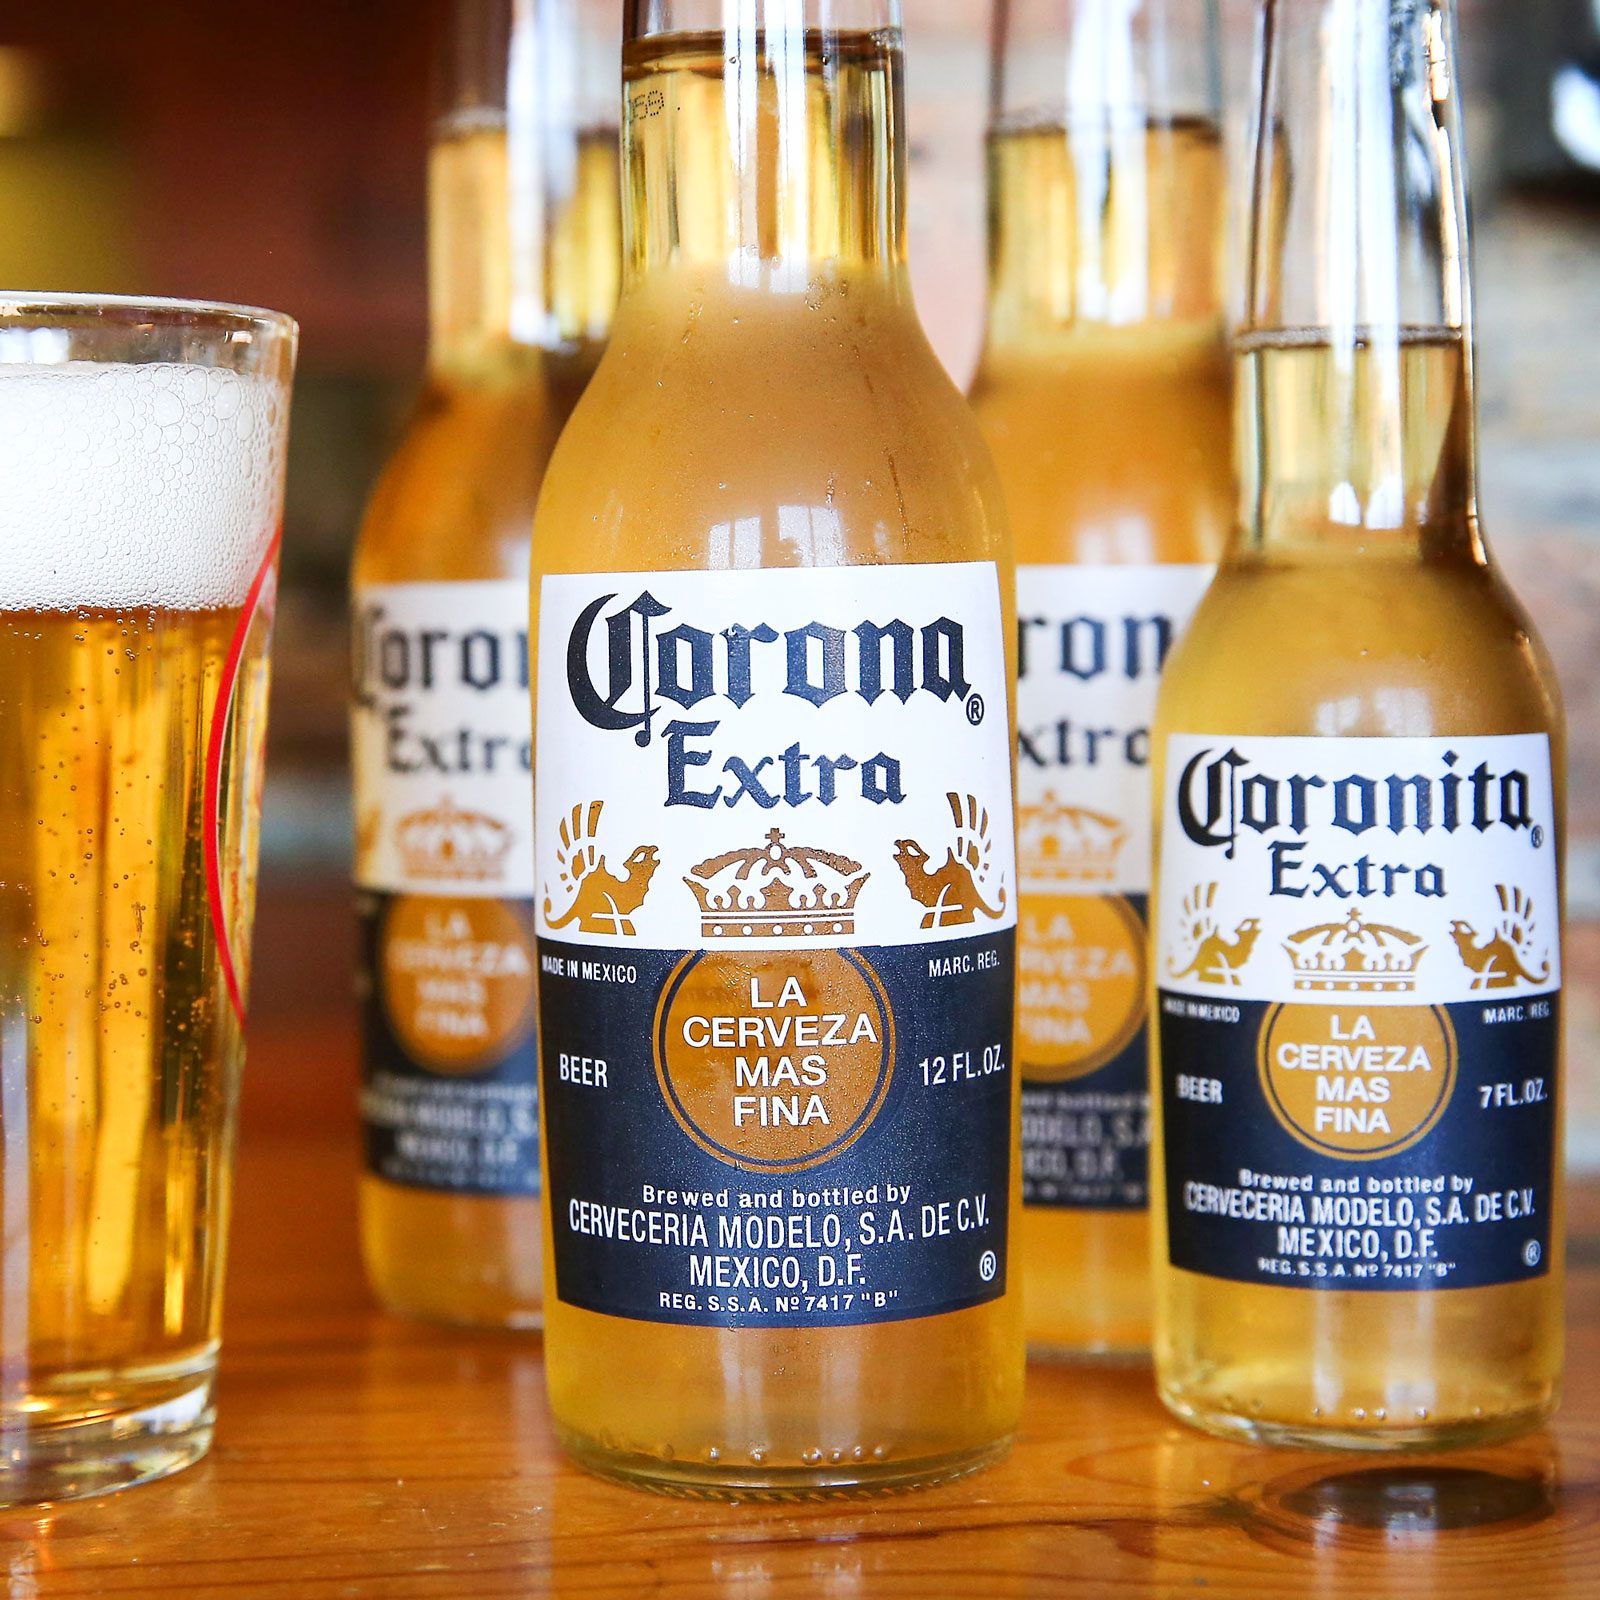 Corona Extra Mexican Beer